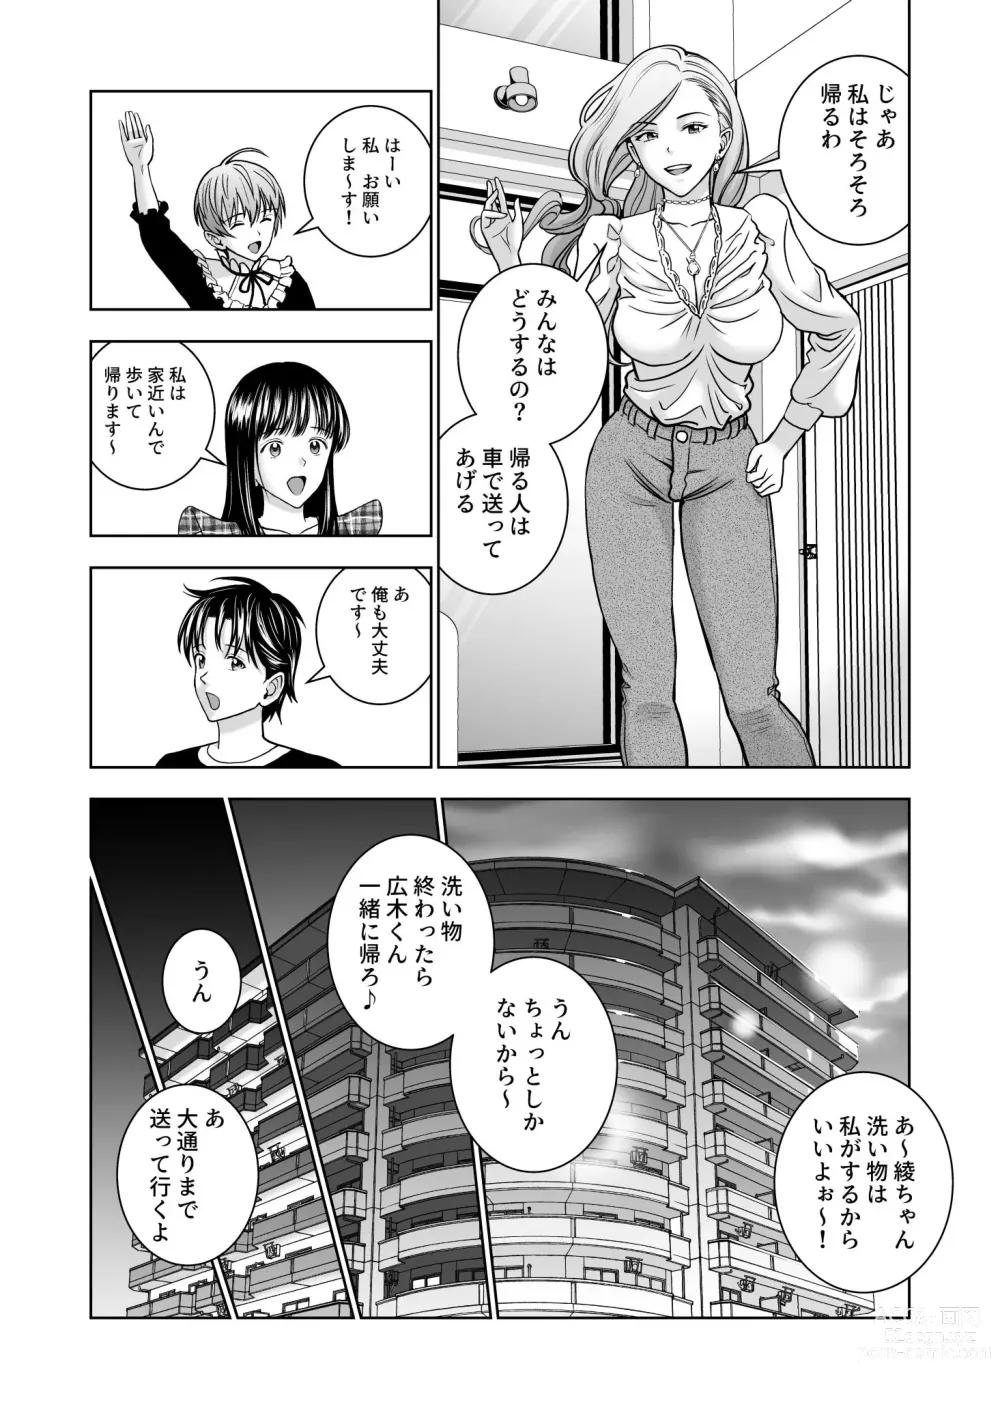 Page 17 of doujinshi Haru Kurabe 5